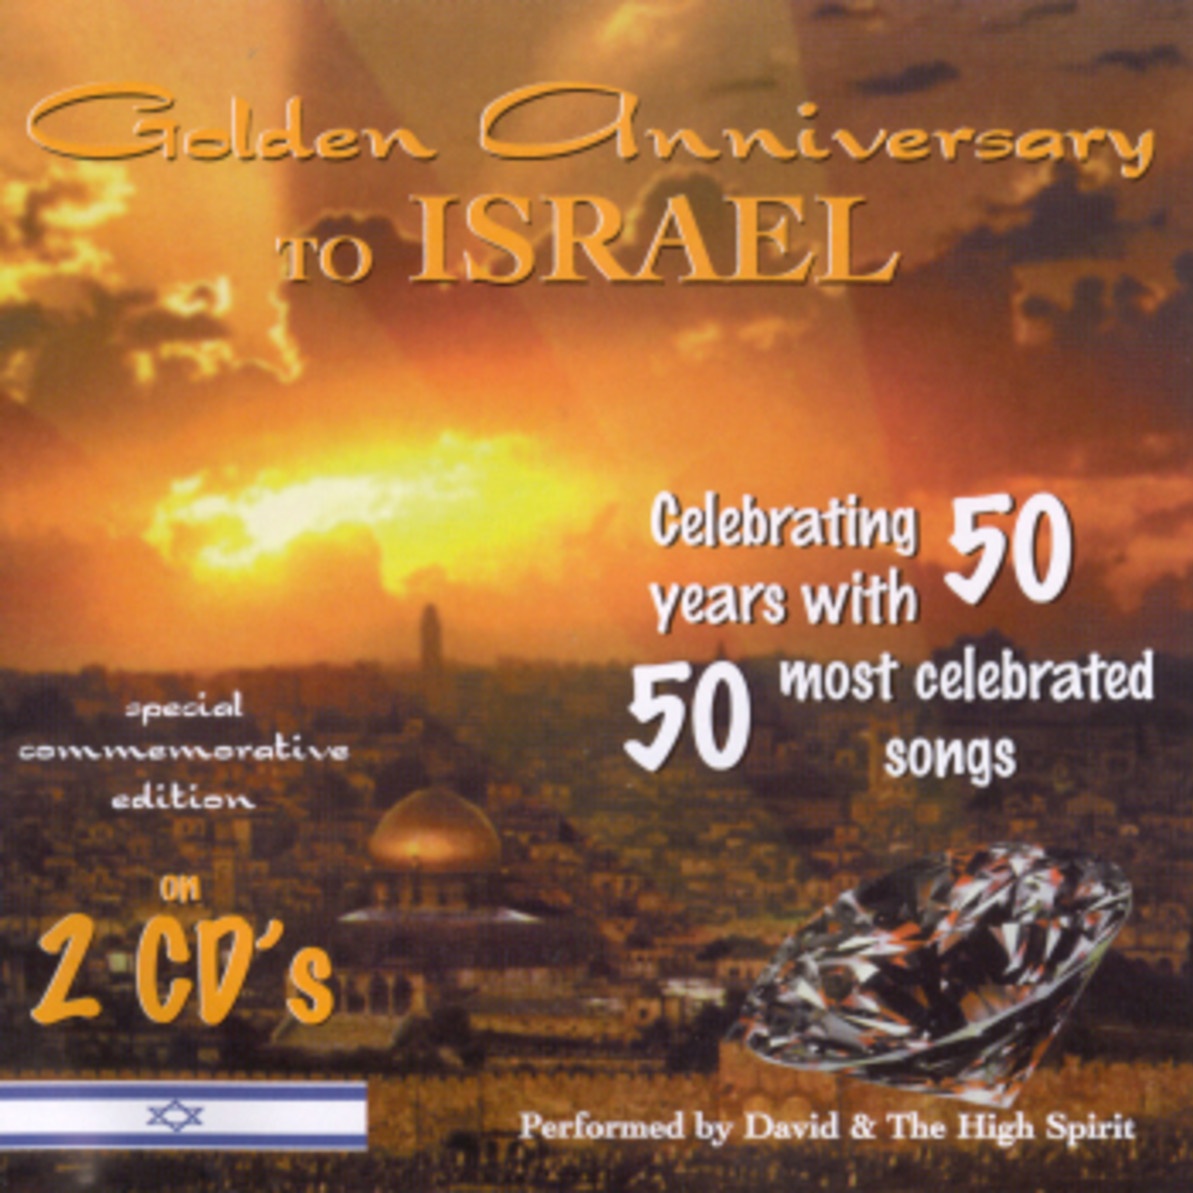 Oseh Shalom - Makes Peace